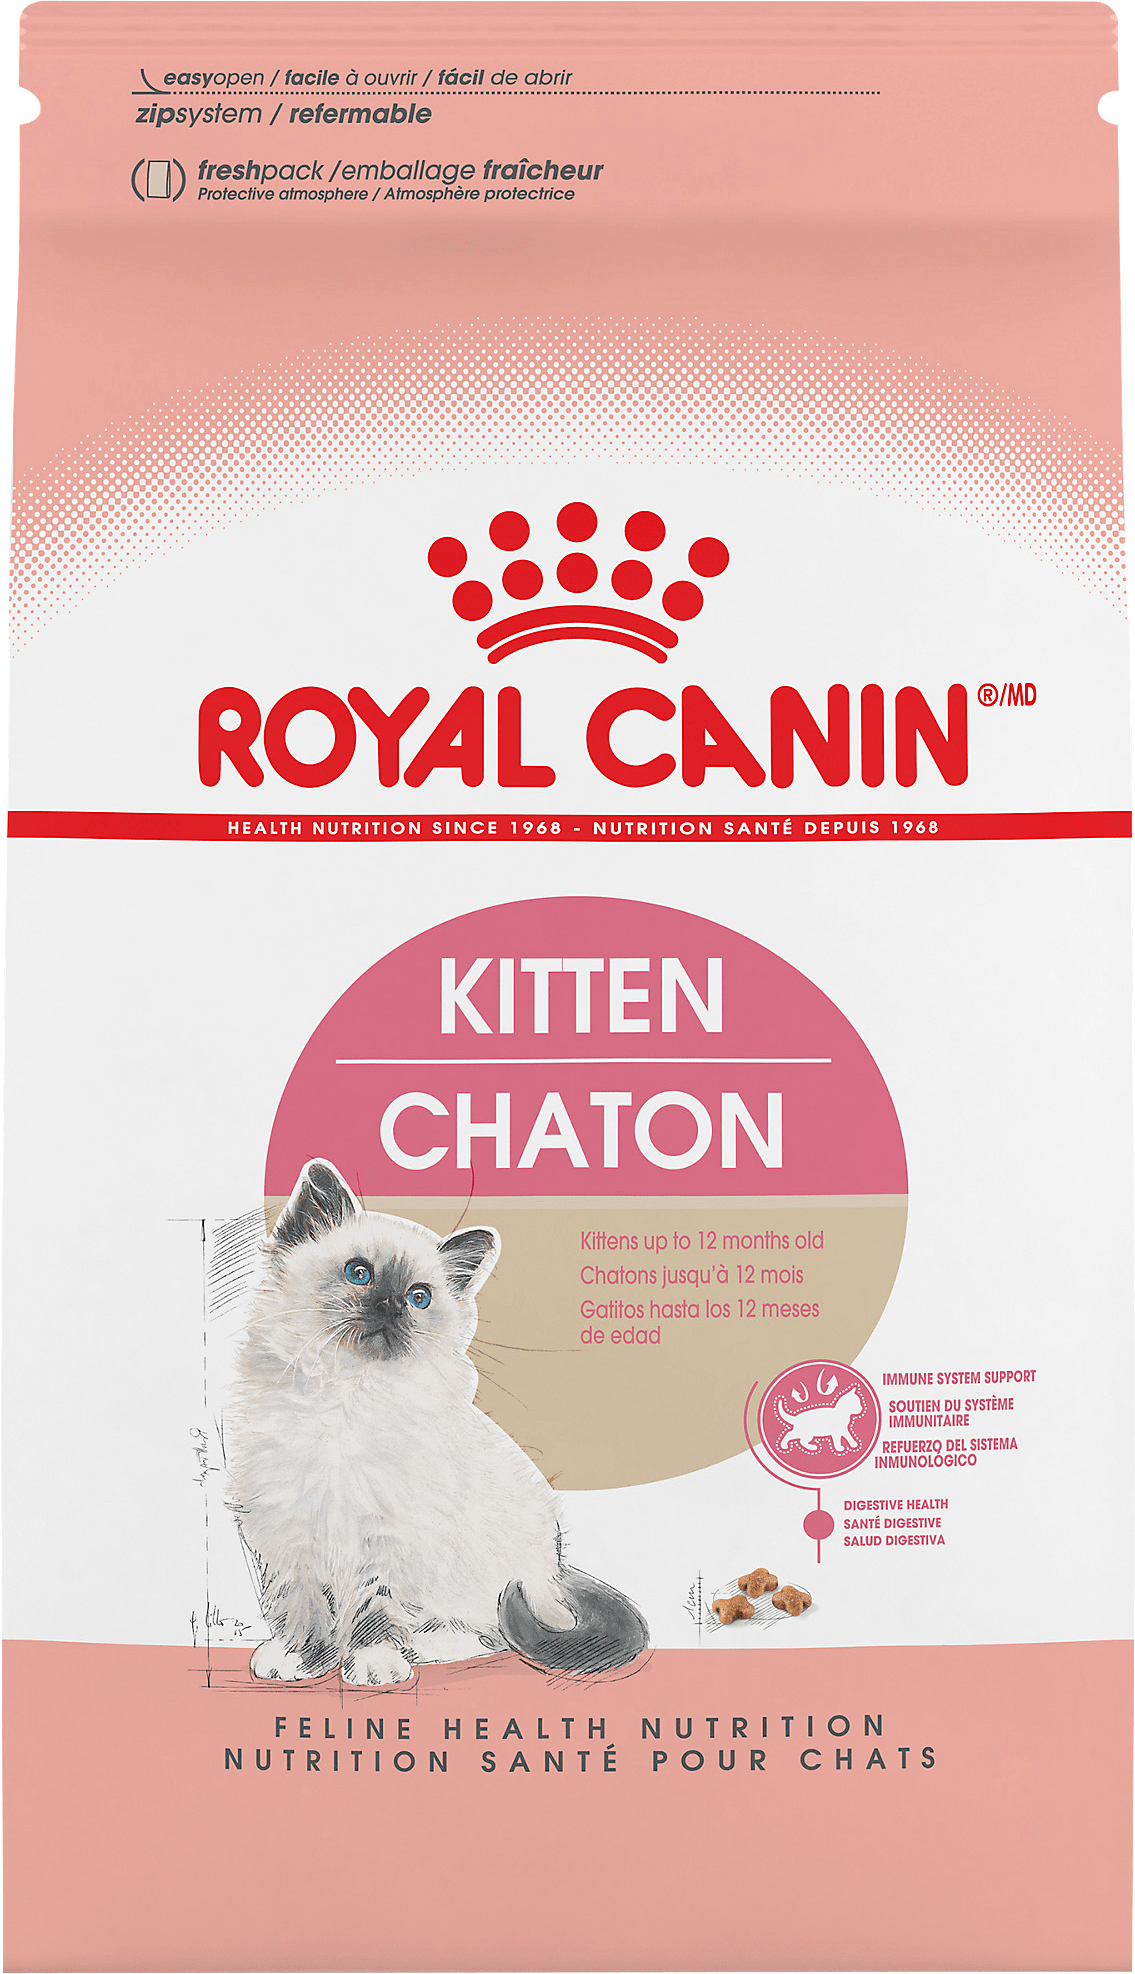 royal canin kitten food best price